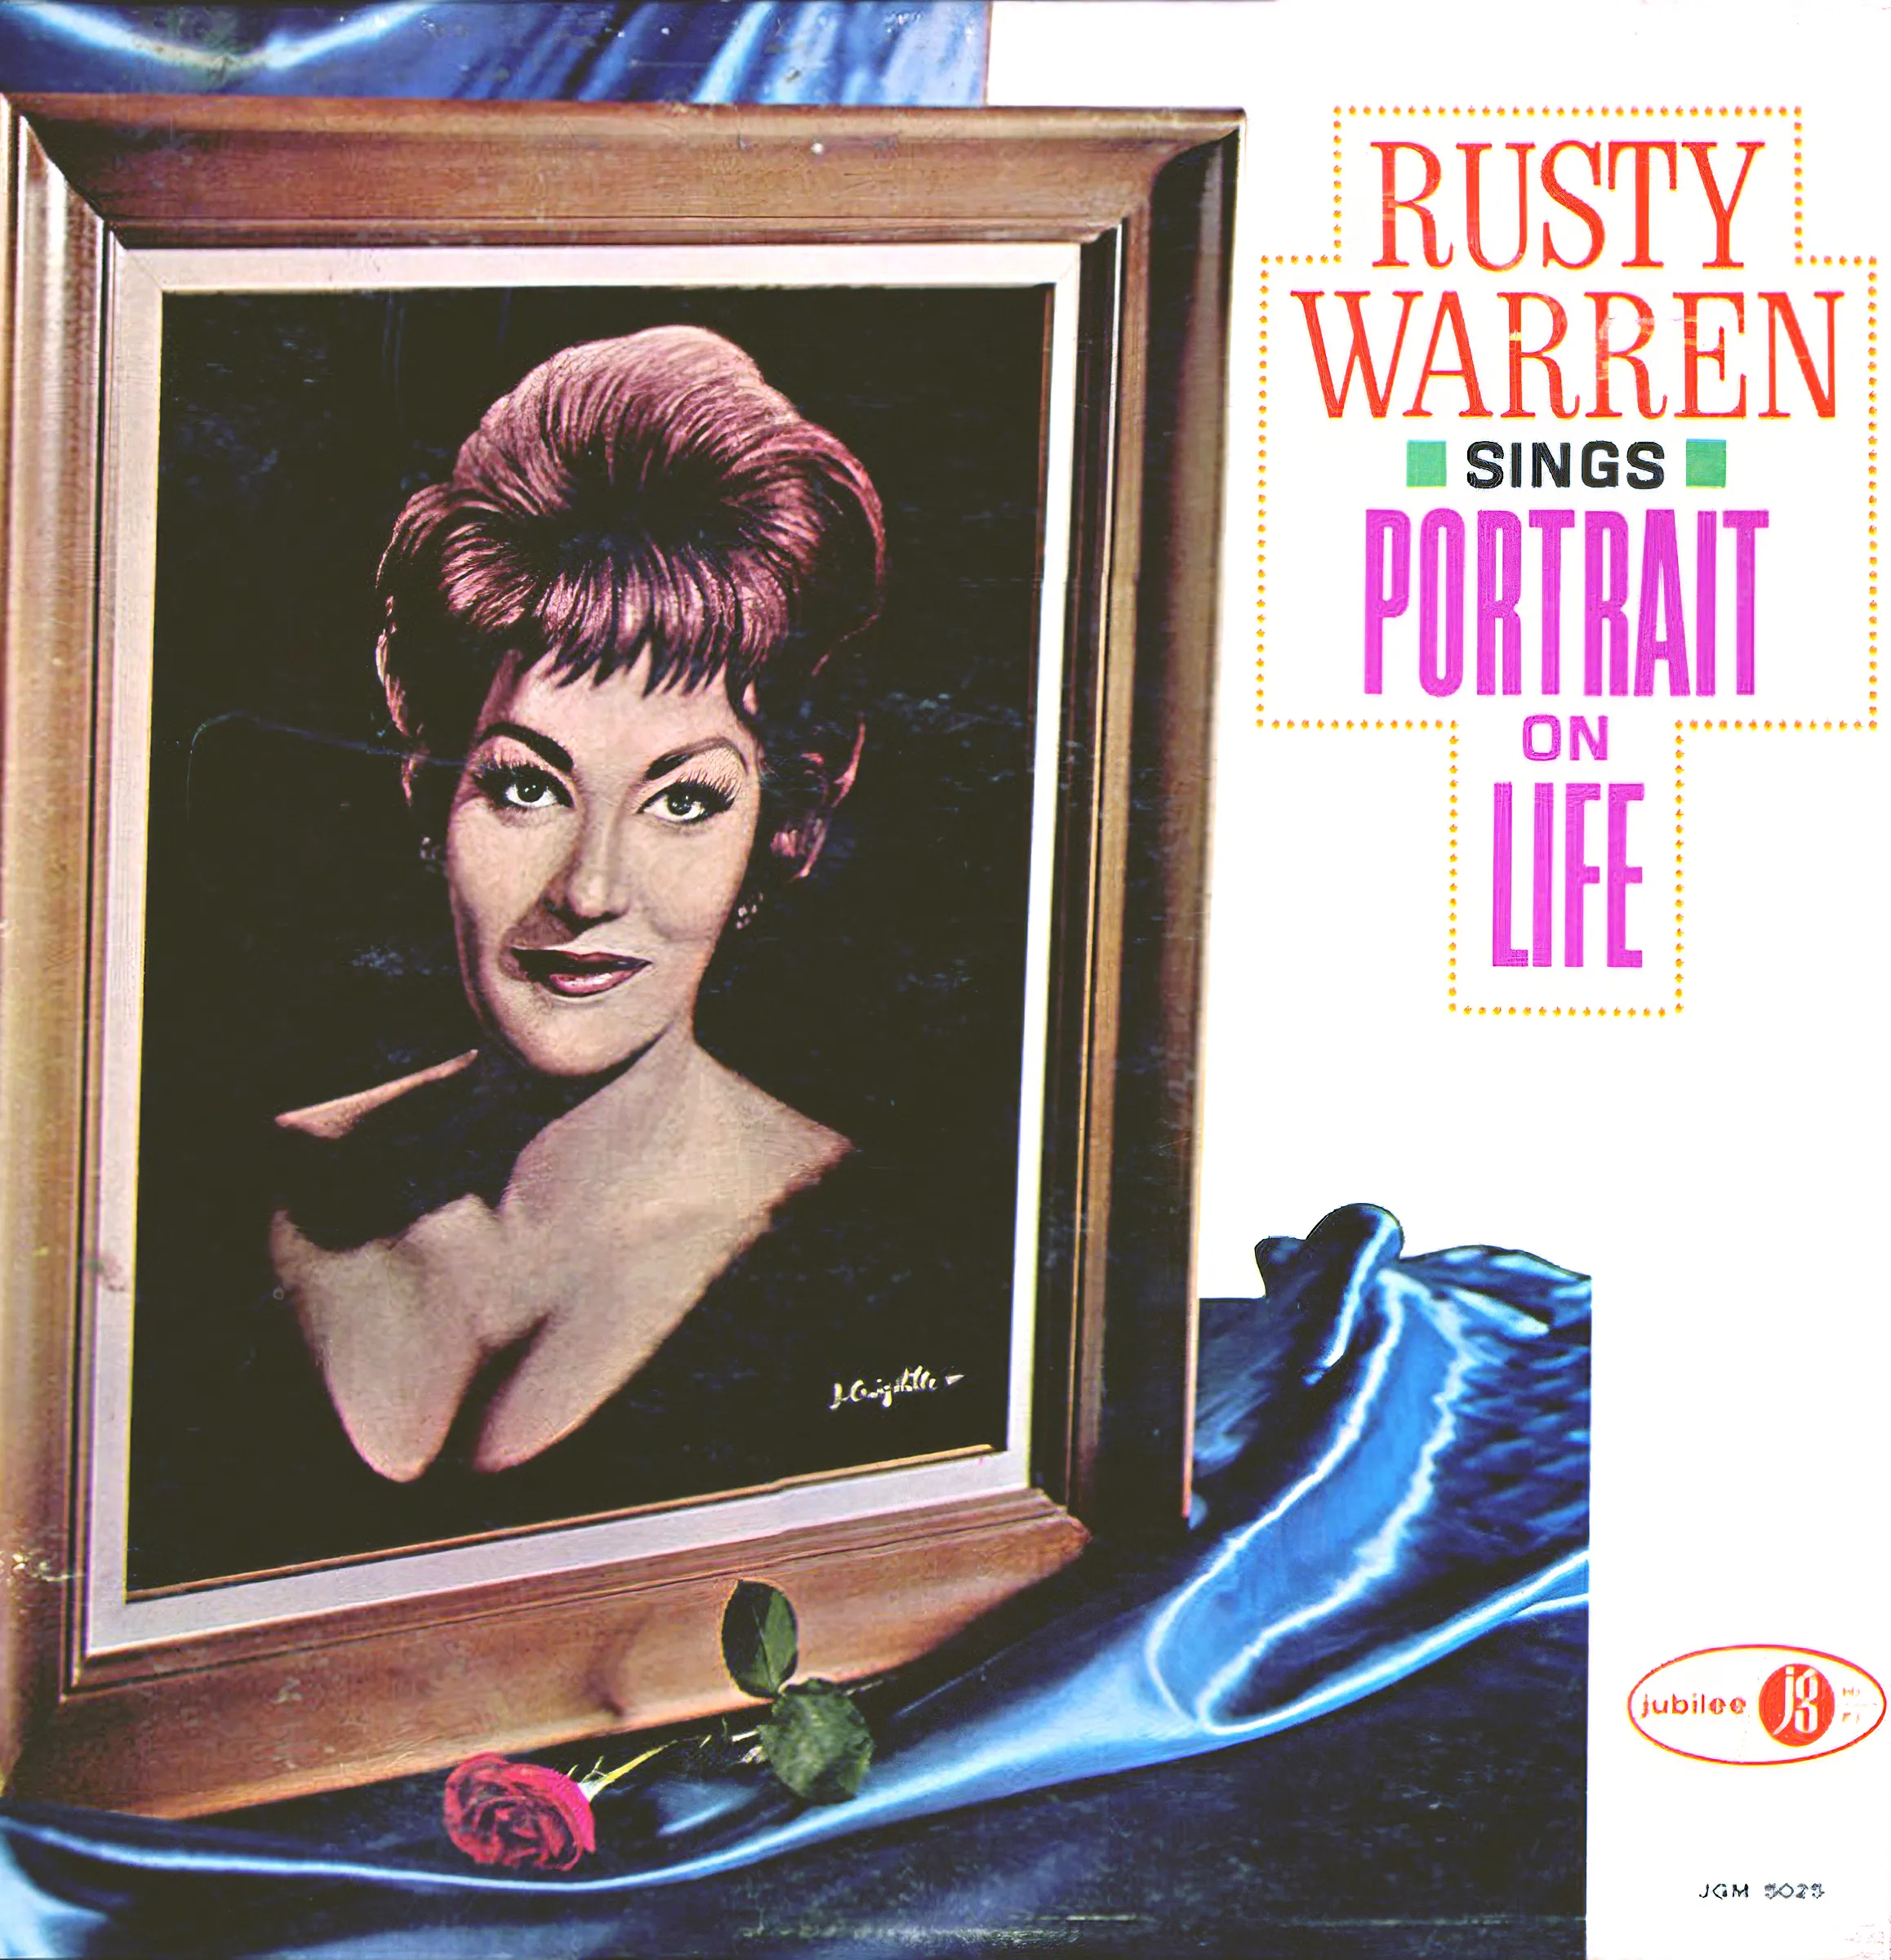 album cover: Rusty Warren Sings Portrait on Life.